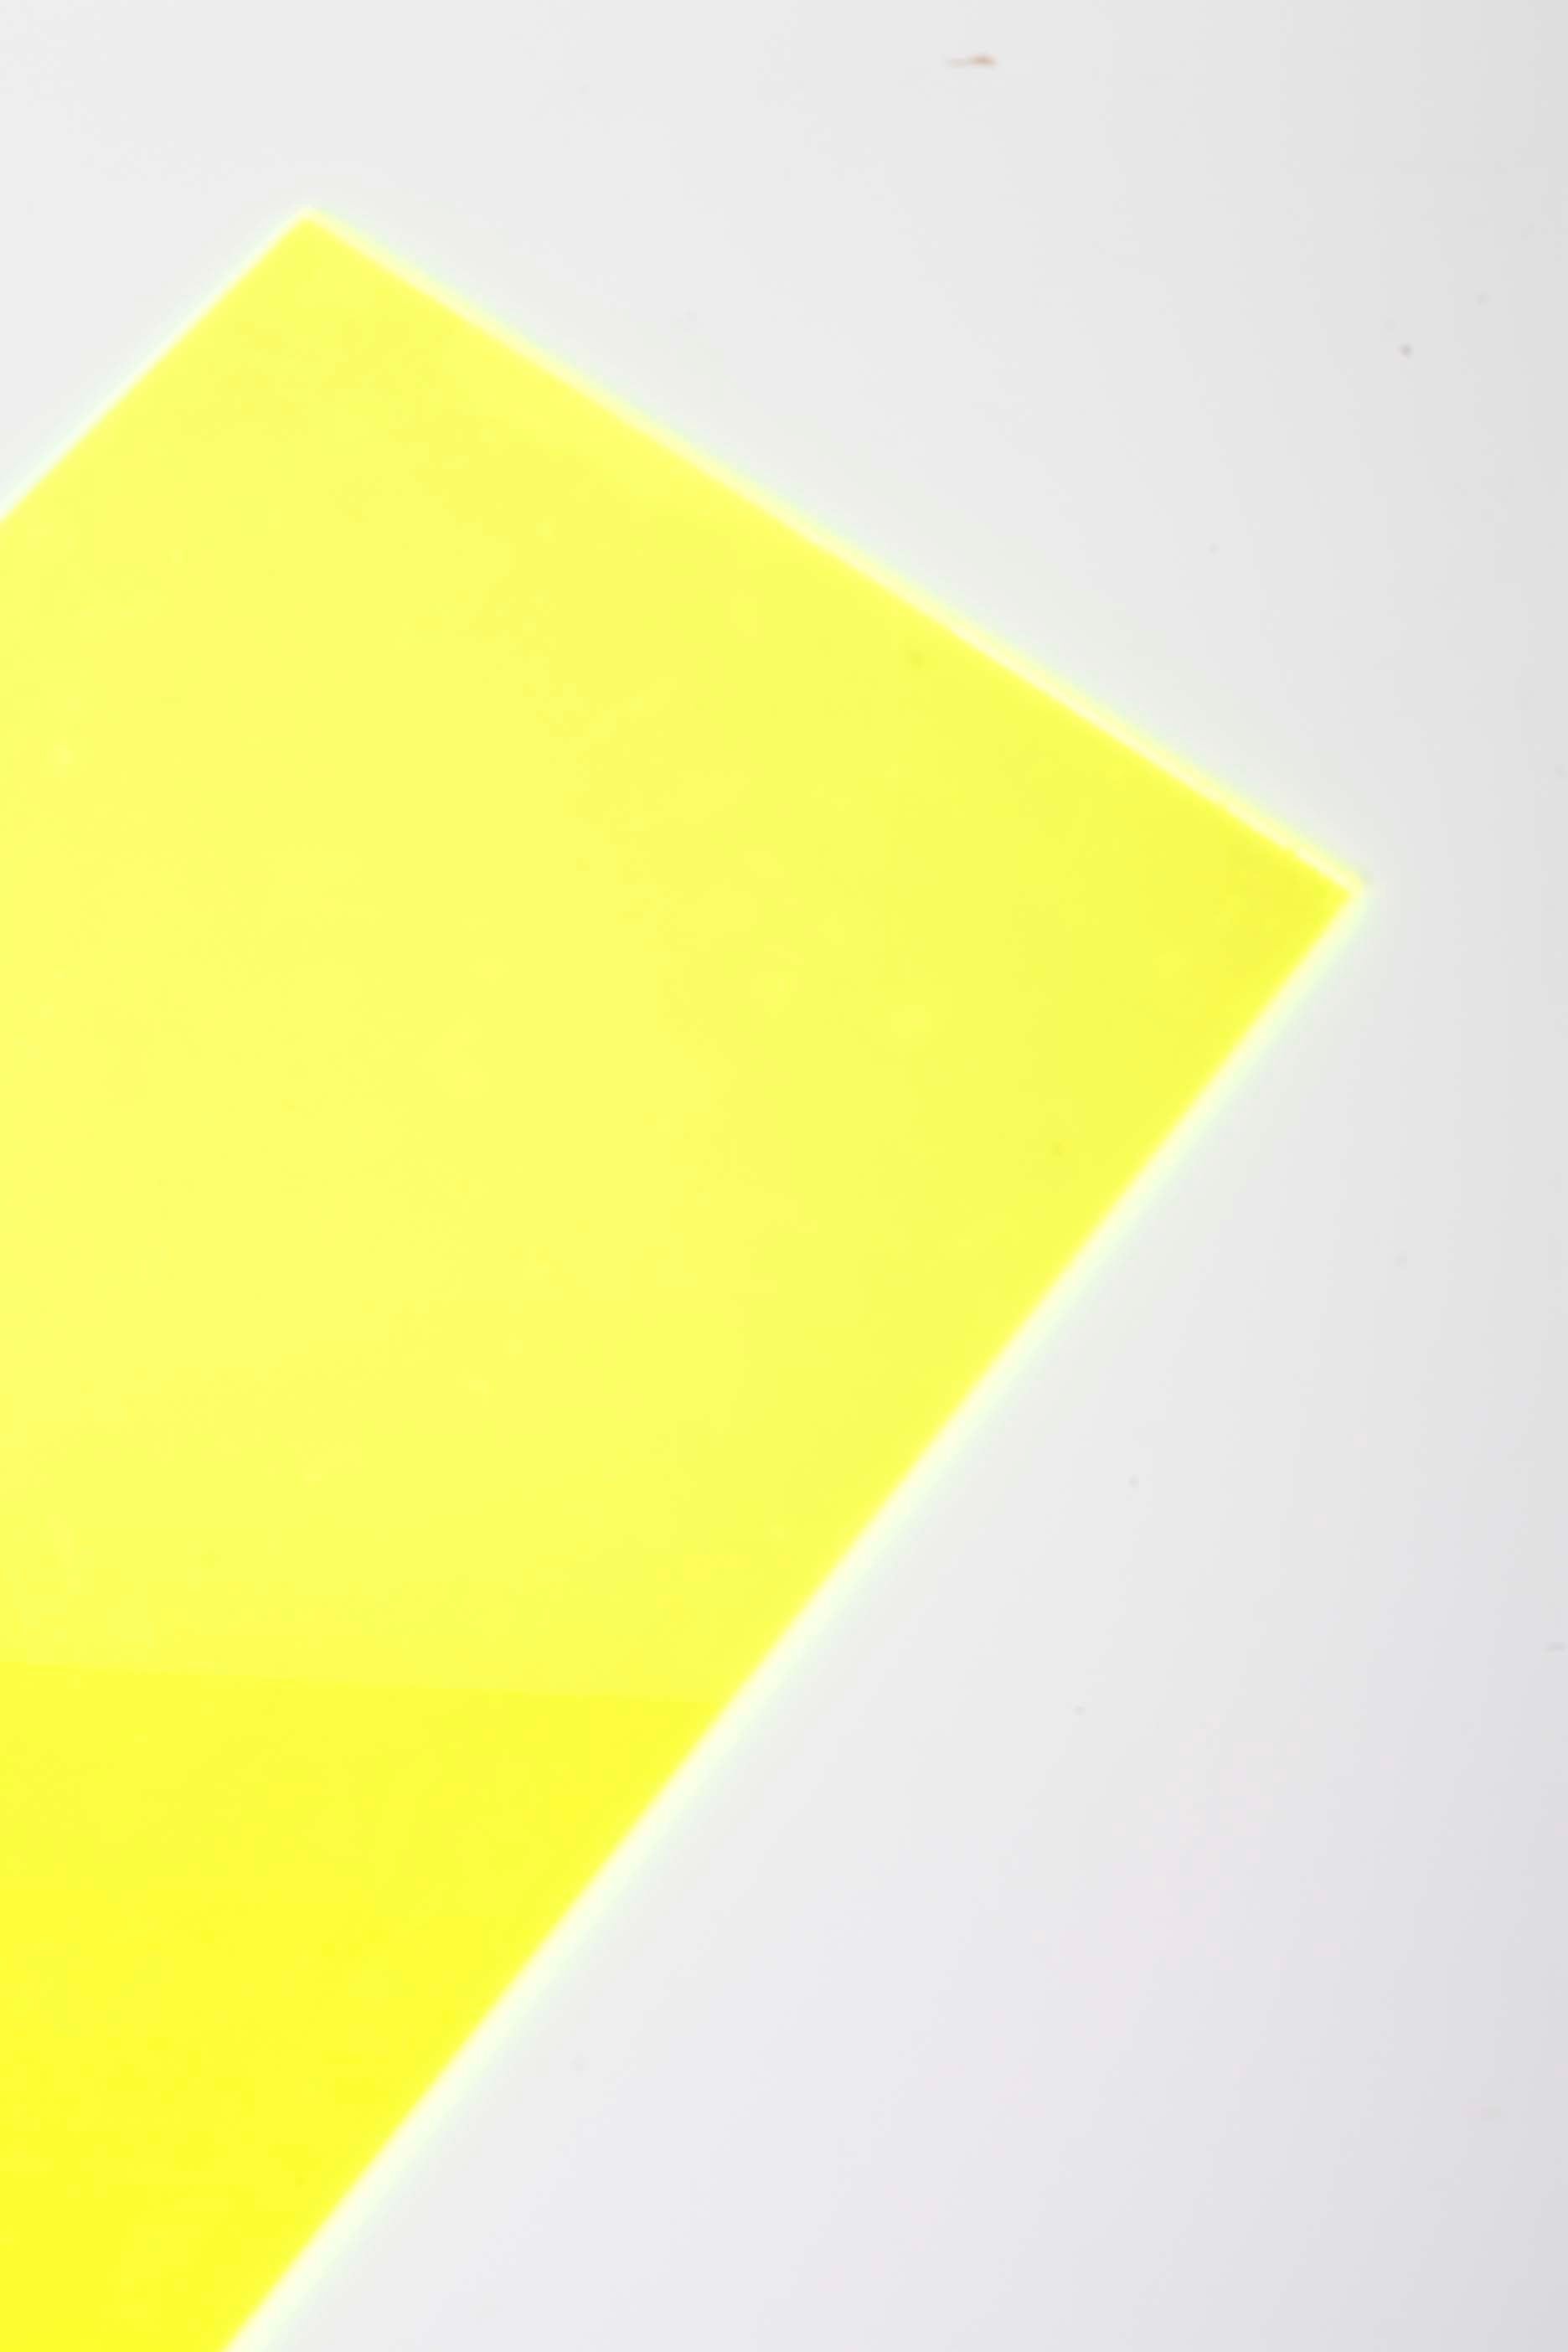 Neon Yellow Rectangular Acrylic Sheet